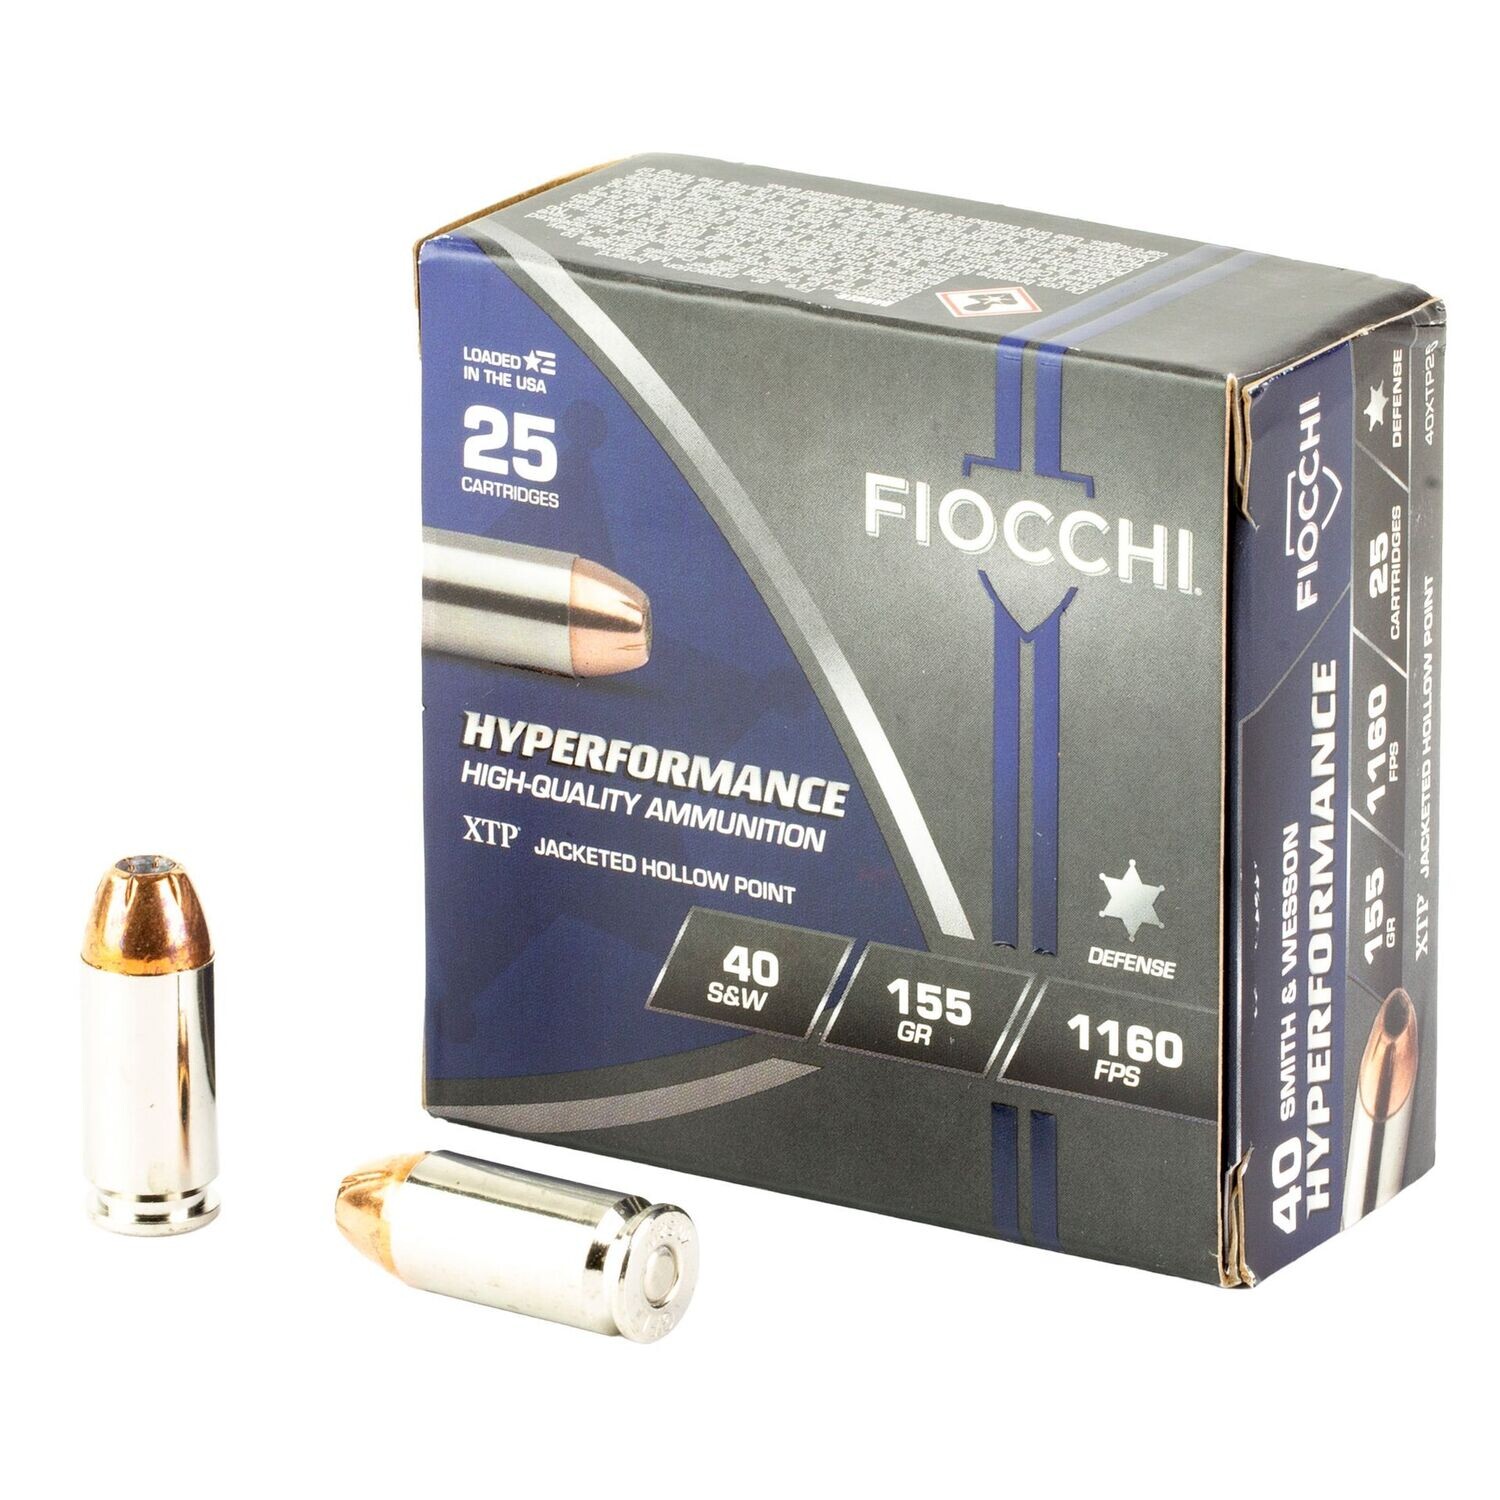 Fiocchi Ammunition, Centerfire Pistol, 40S&W, 155 Grain, Copper Metal Jacket, 50 Round Box